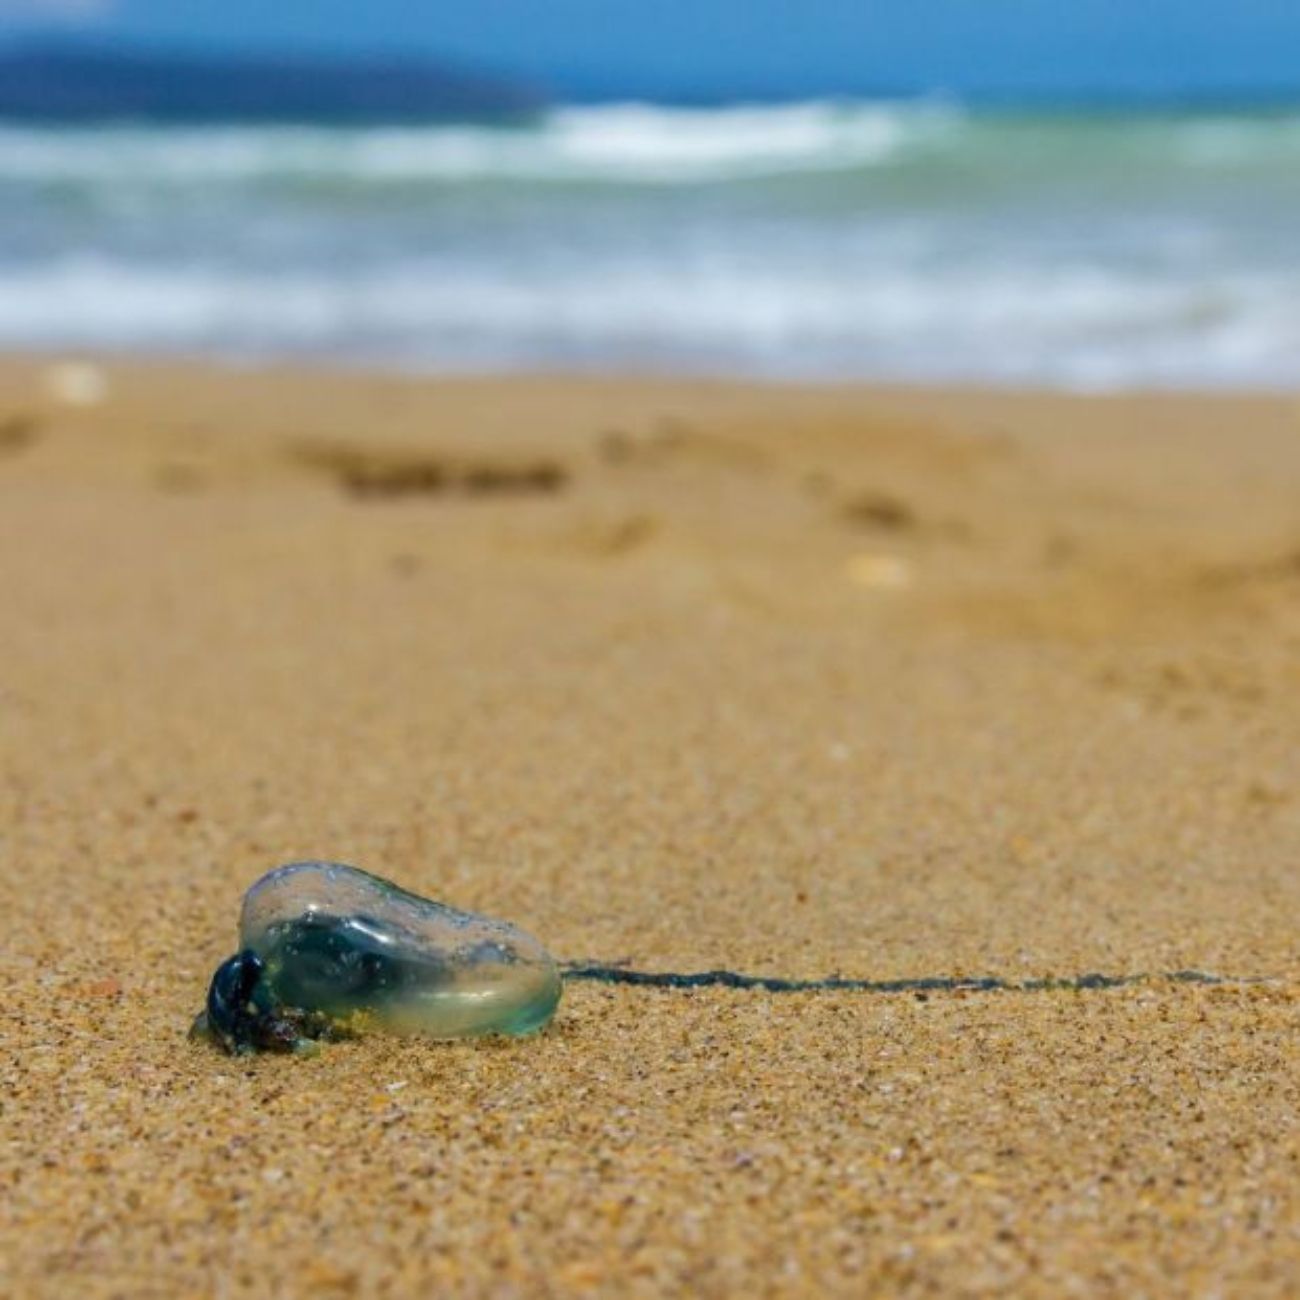 Plaga de medusas en las playas